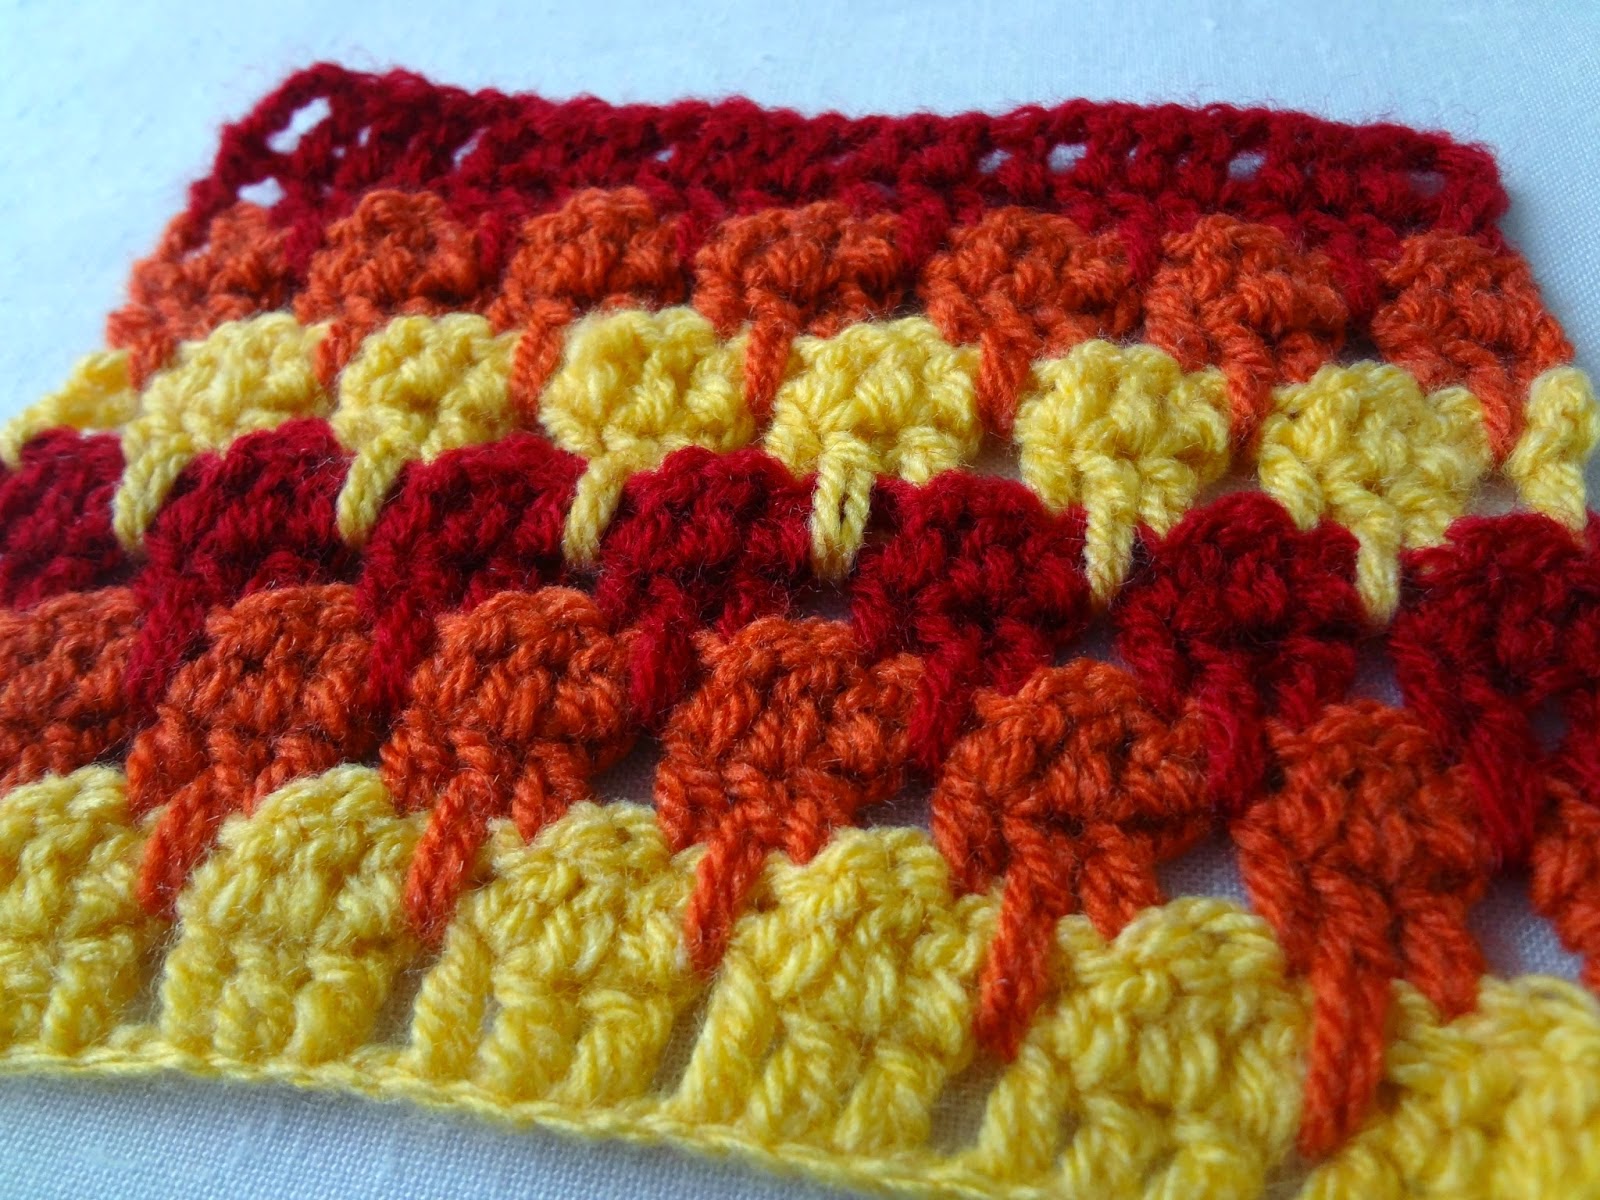 http://thelittletreasures.blogspot.com/2015/04/larksfoot-crochet-stitch-pattern-or.html